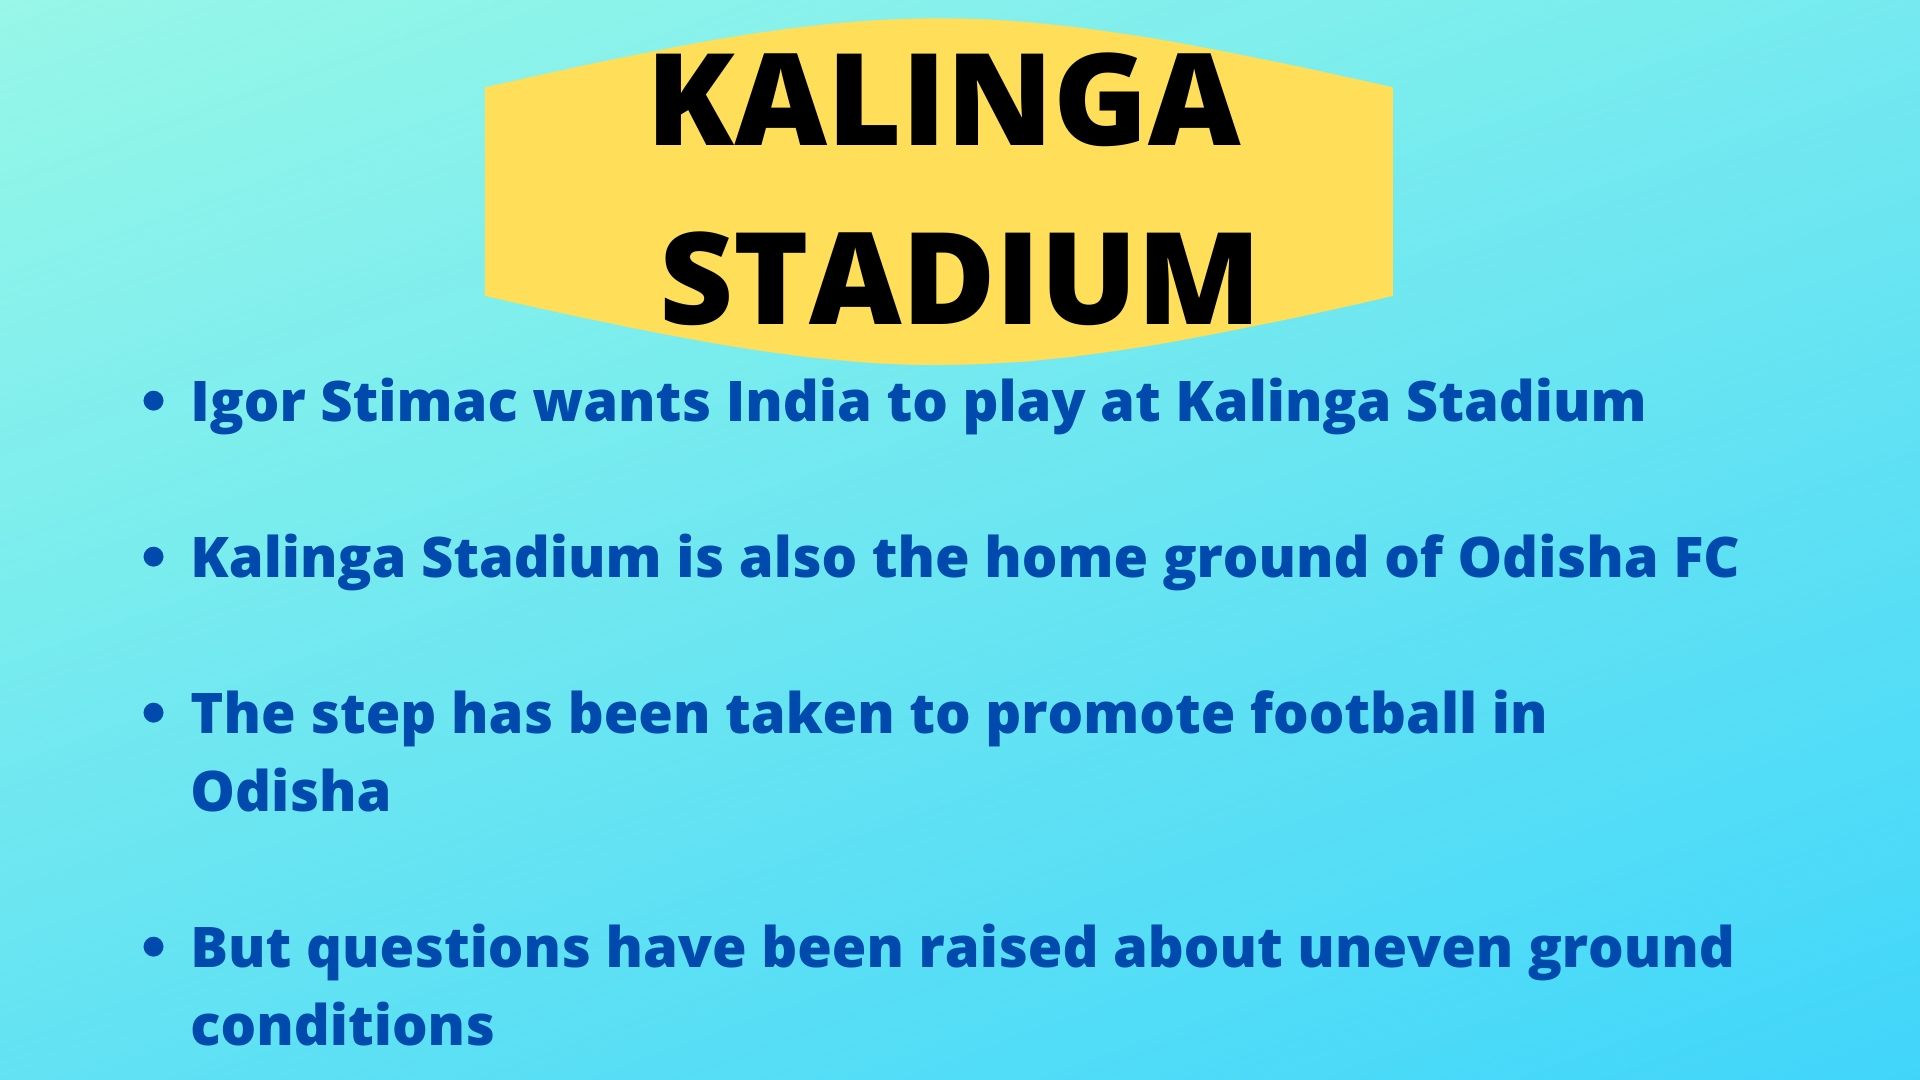 A few details about Kalinga Stadium